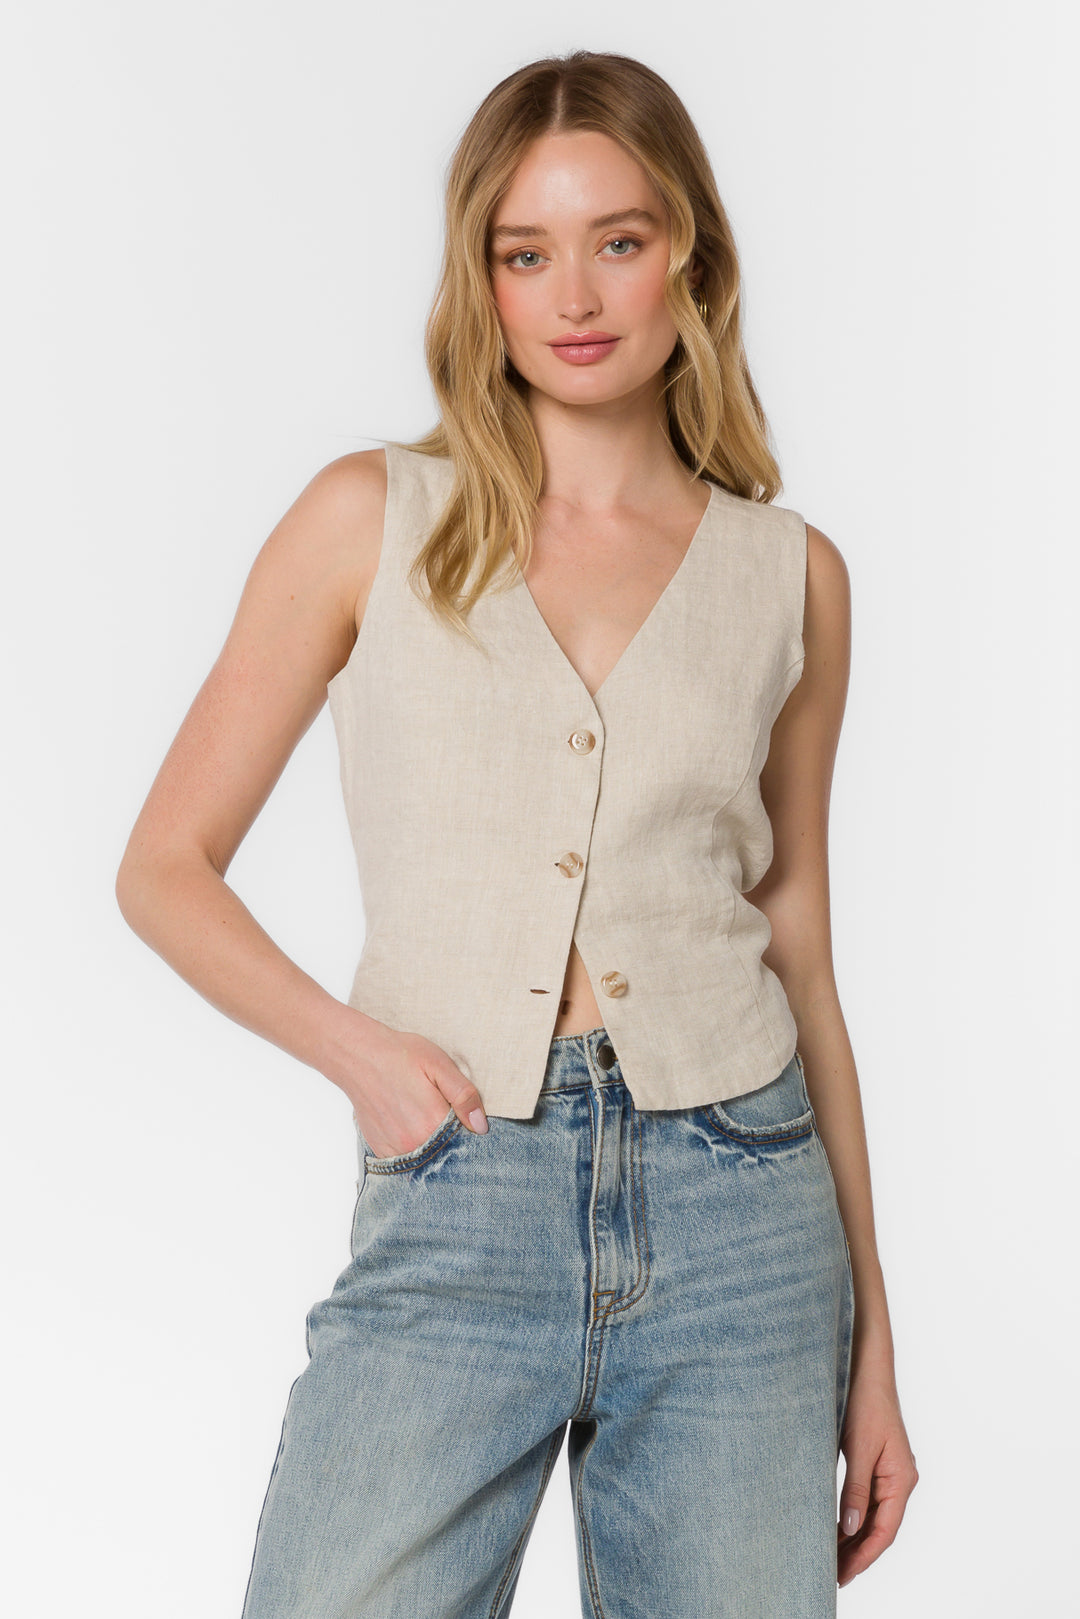 Dellis Ivory Vest - Jackets & Outerwear - Velvet Heart Clothing